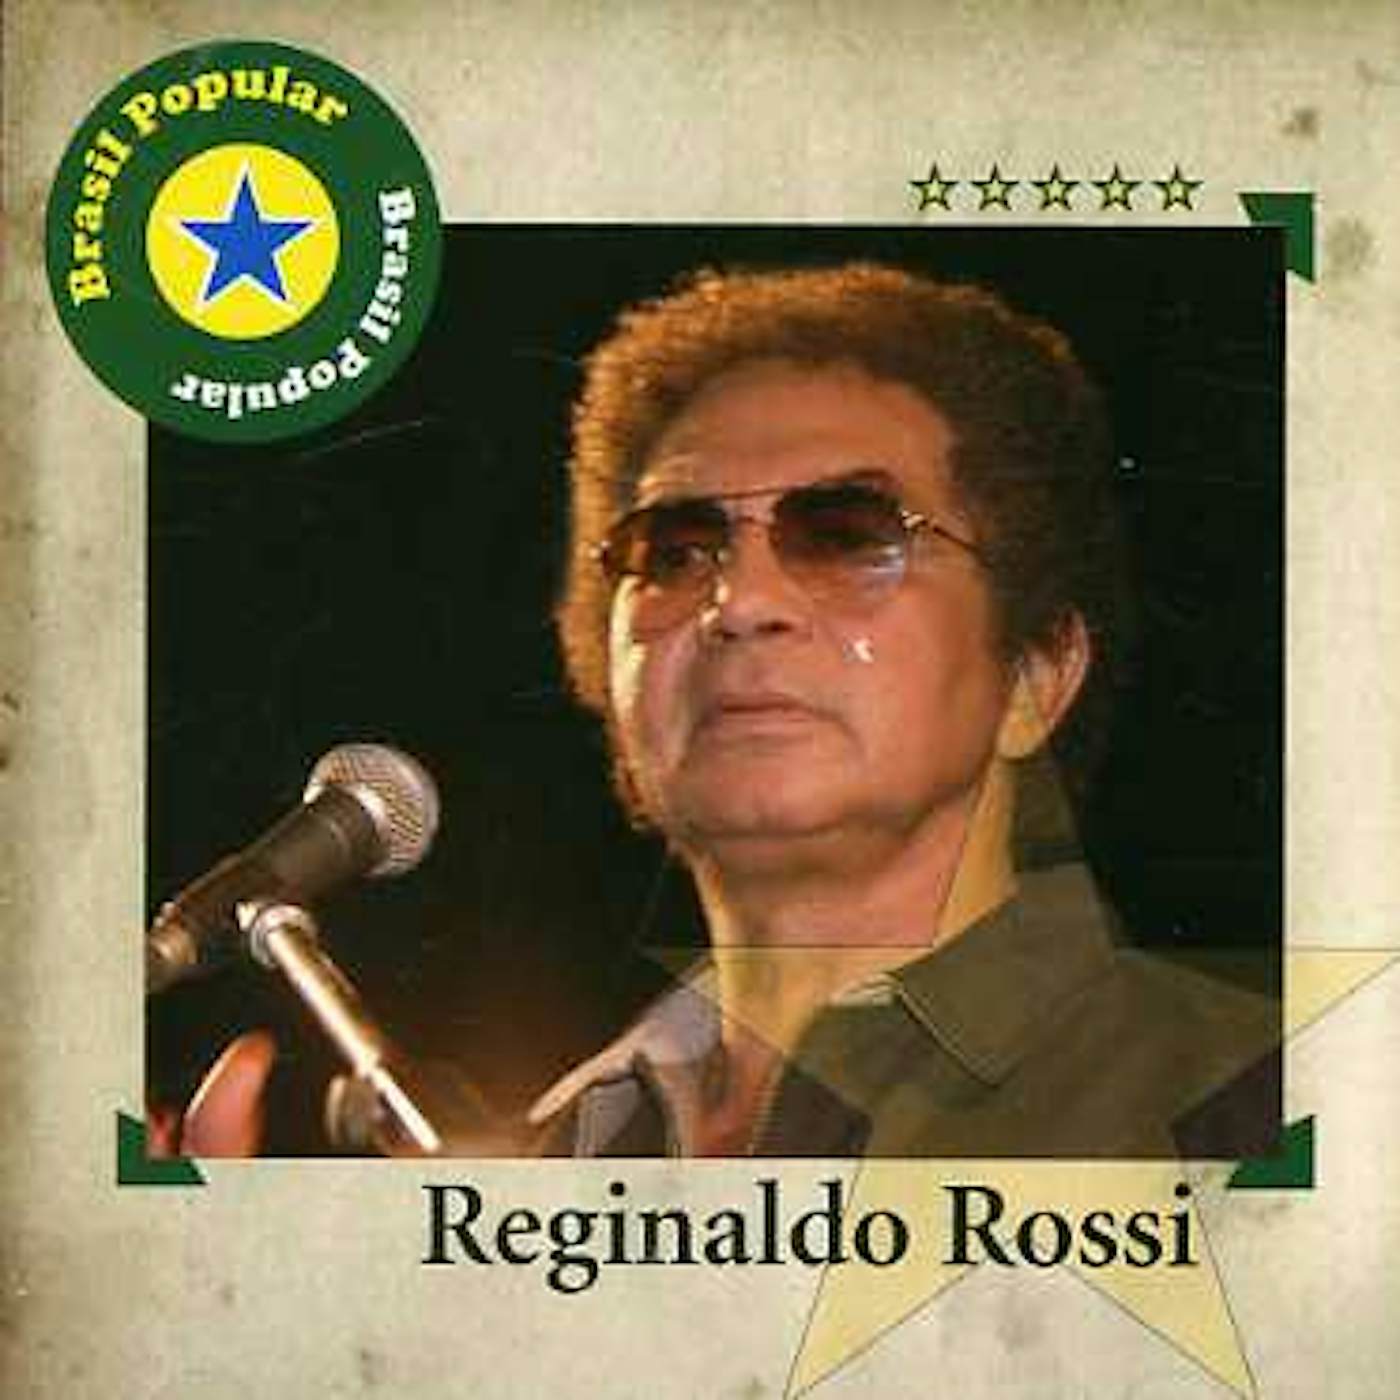 BRASIL POPULAR REGINALDO ROSSI CD